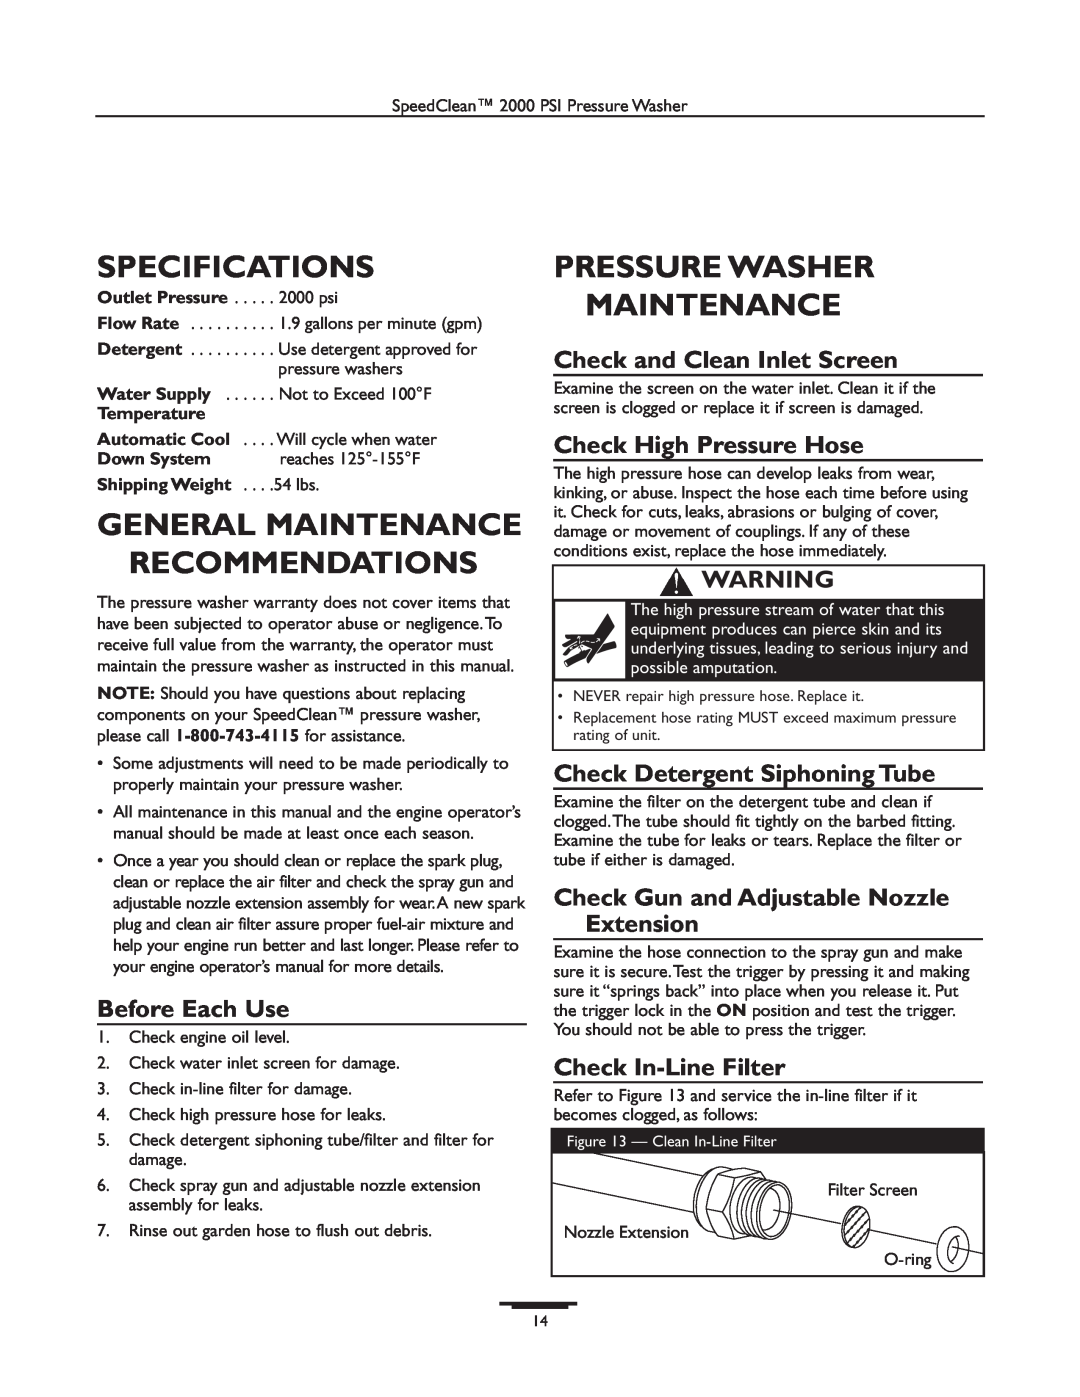 Briggs & Stratton 020238-0 Specifications, General Maintenance Recommendations, Pressure Washer Maintenance, Temperature 